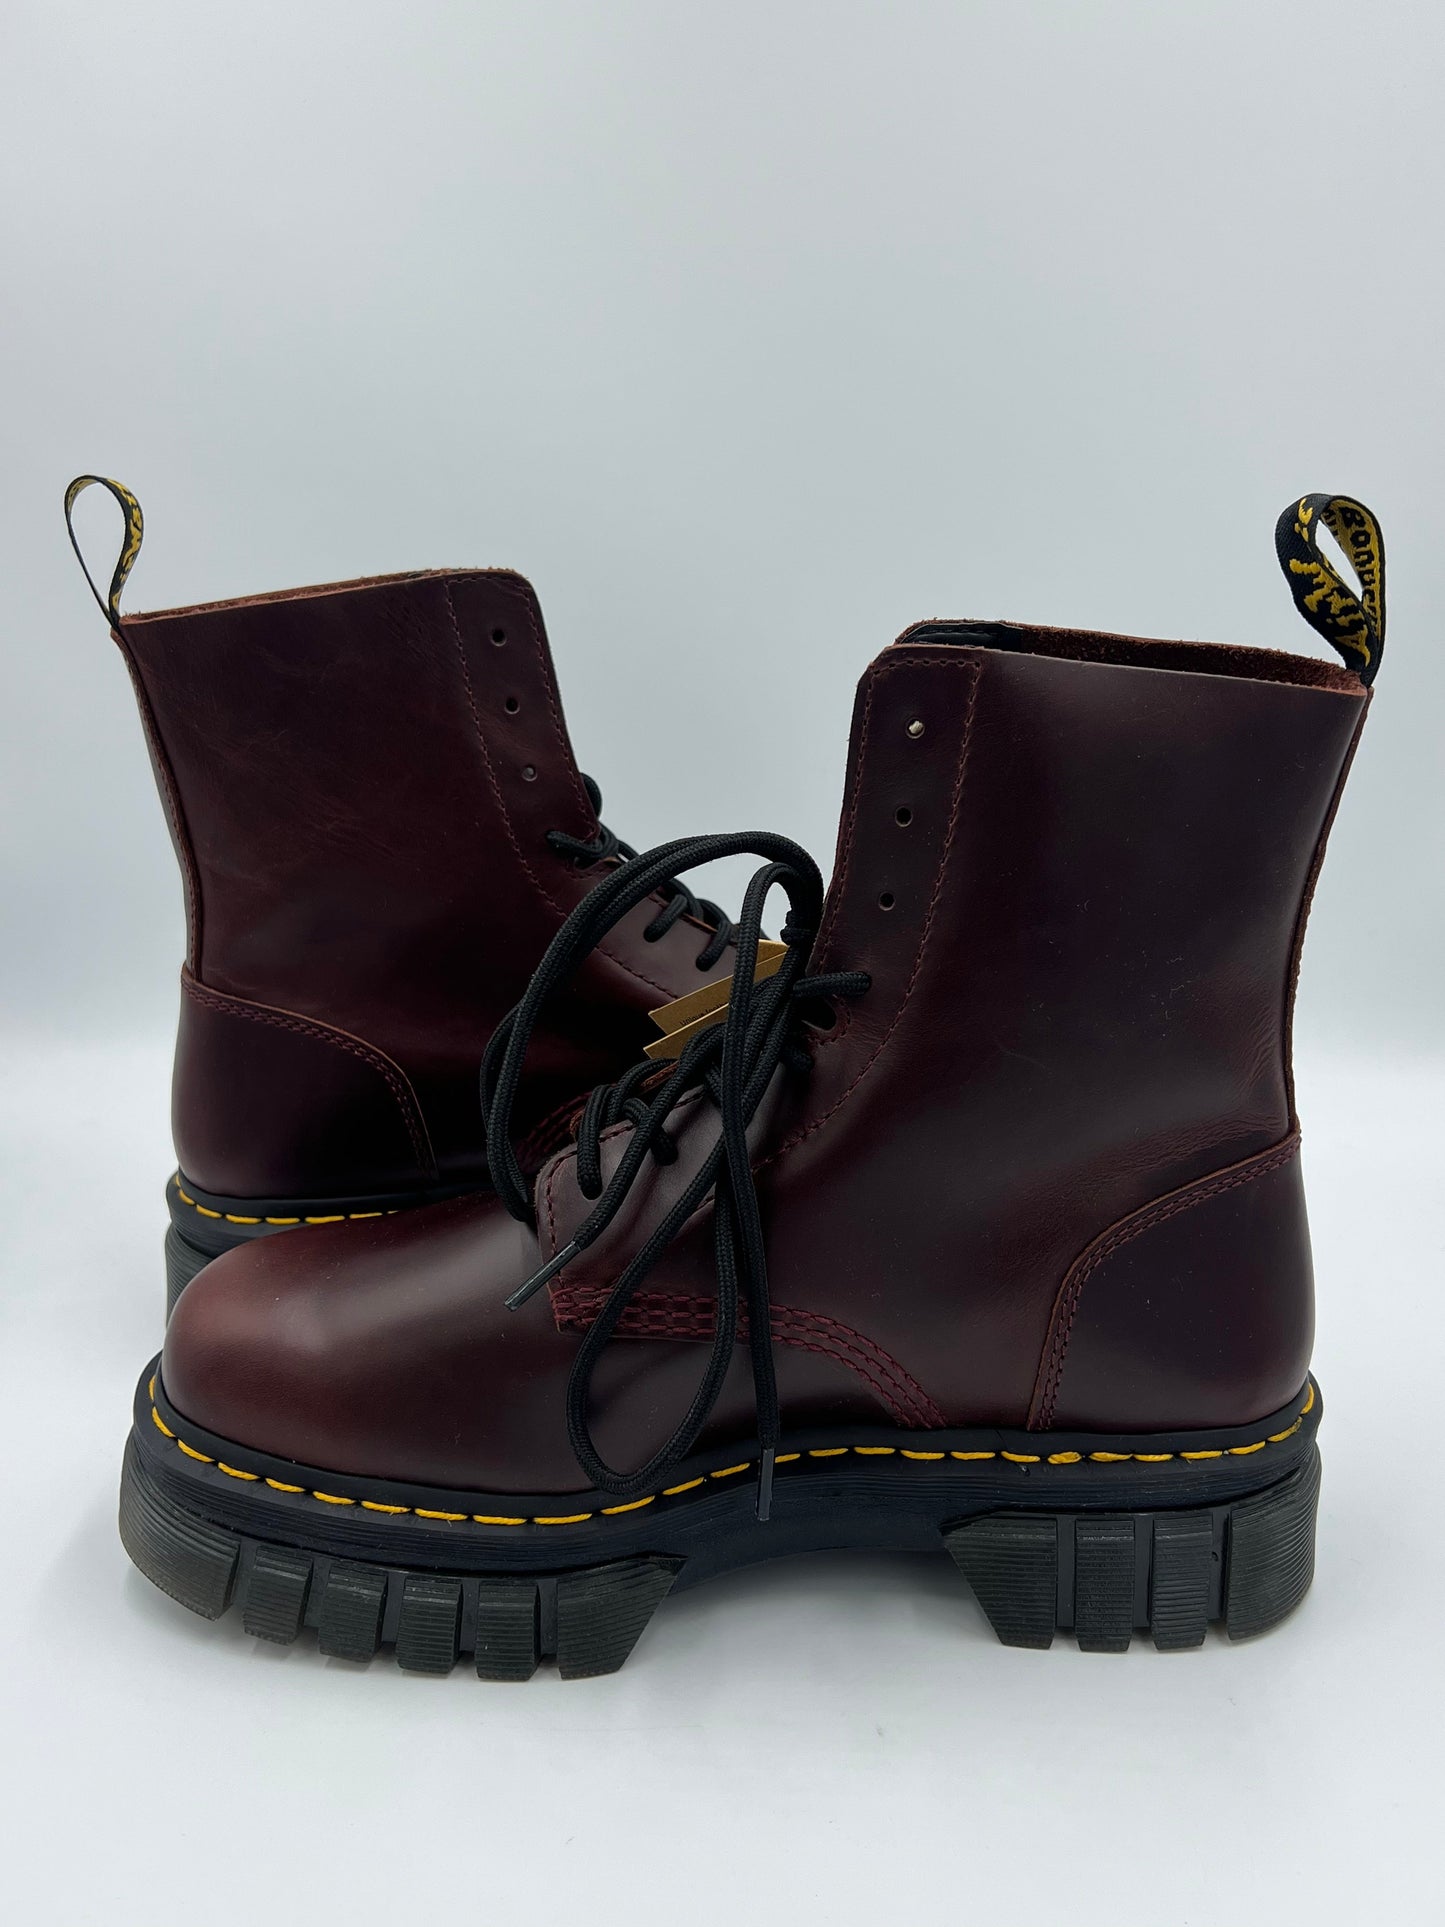 New! Dr Martens Audrick Platform Boots, Size 10